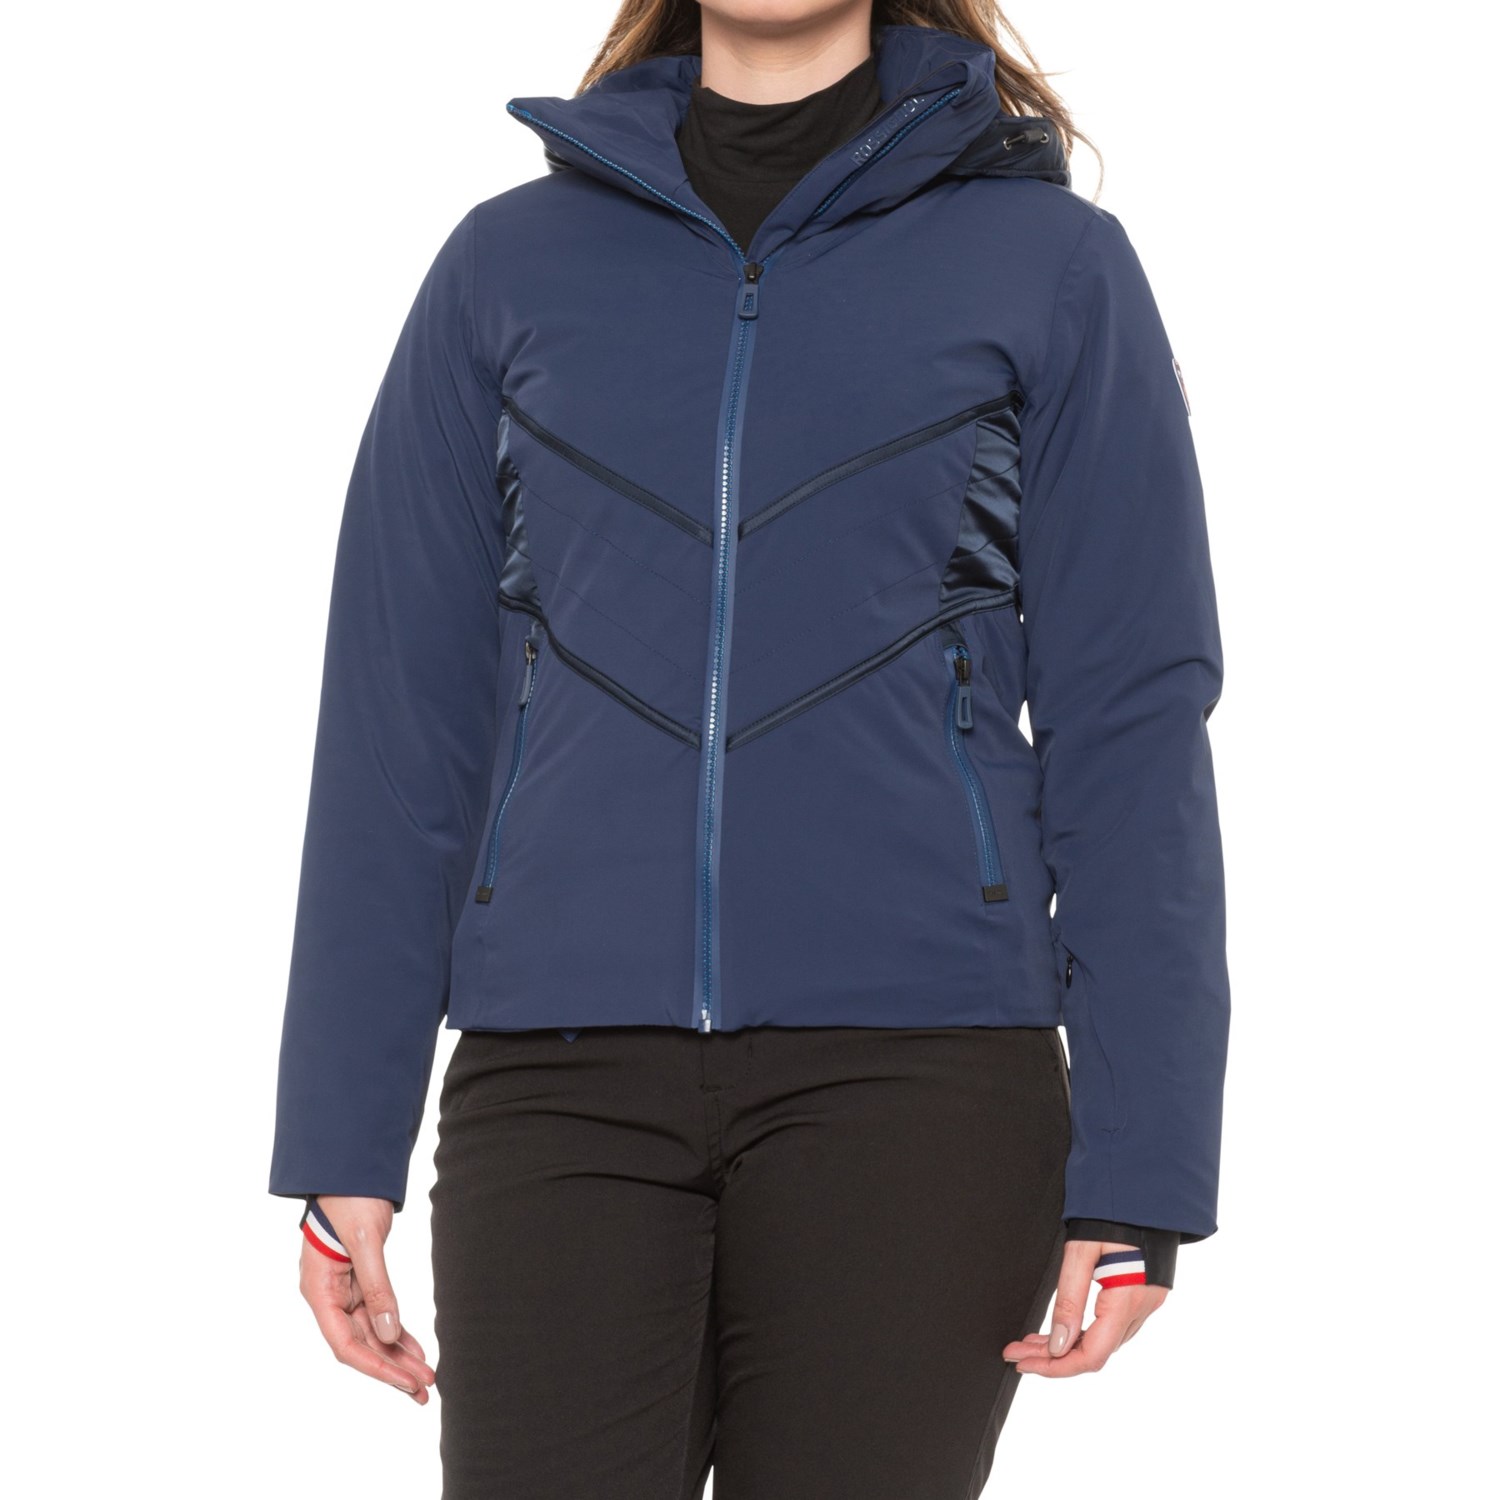 Rossignol React Merino-Lined Ski Jacket - Waterproof, Insulated - Save 66%